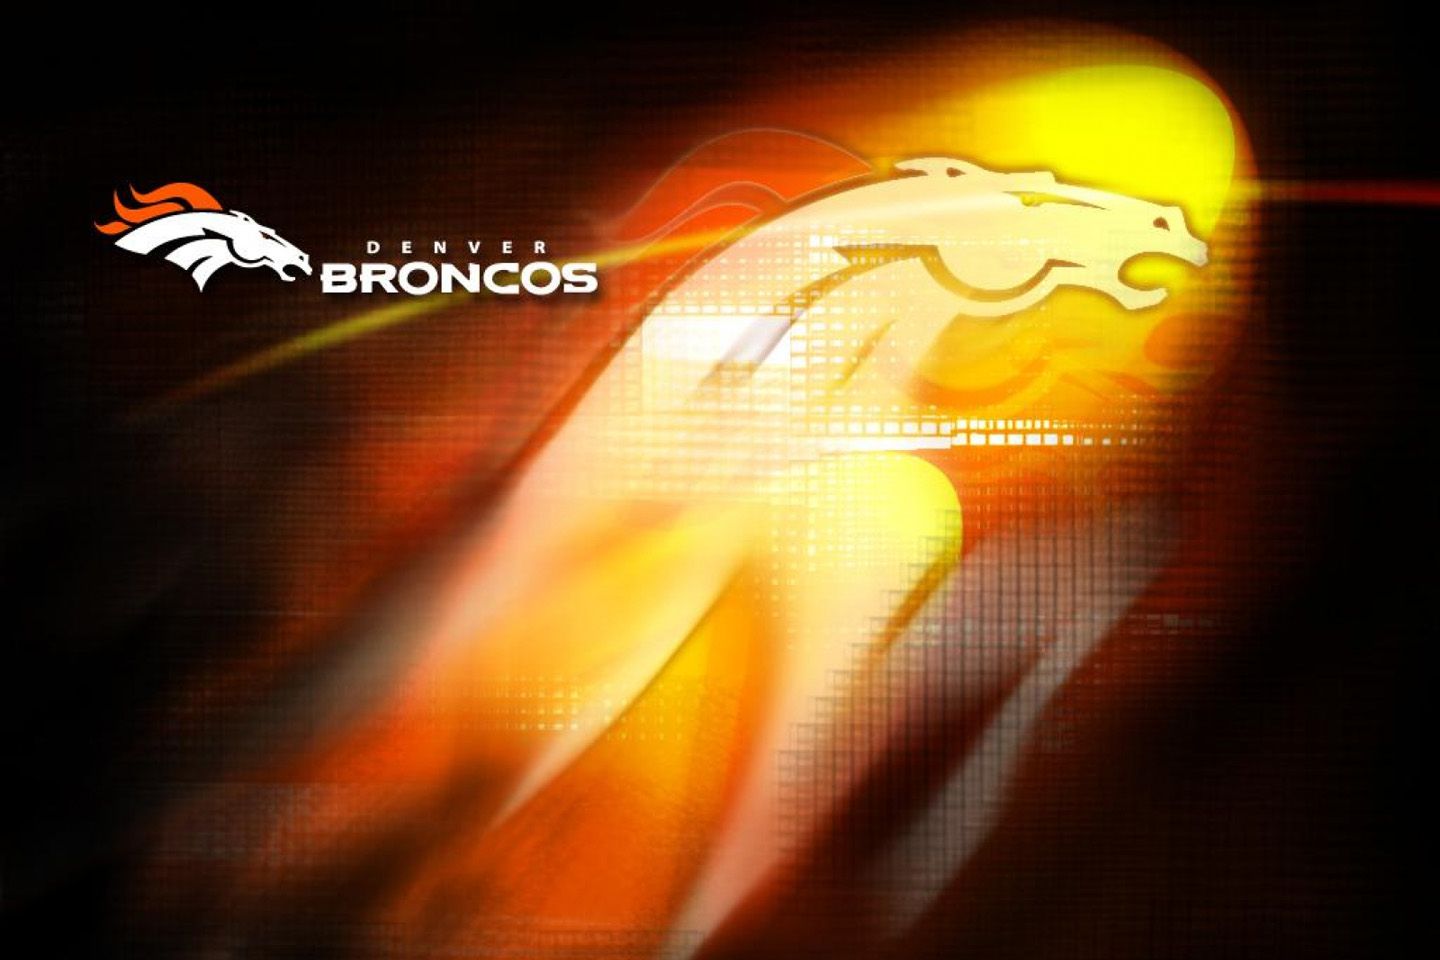 Denver Broncos Wallpaper HD Download Free Wallpapers